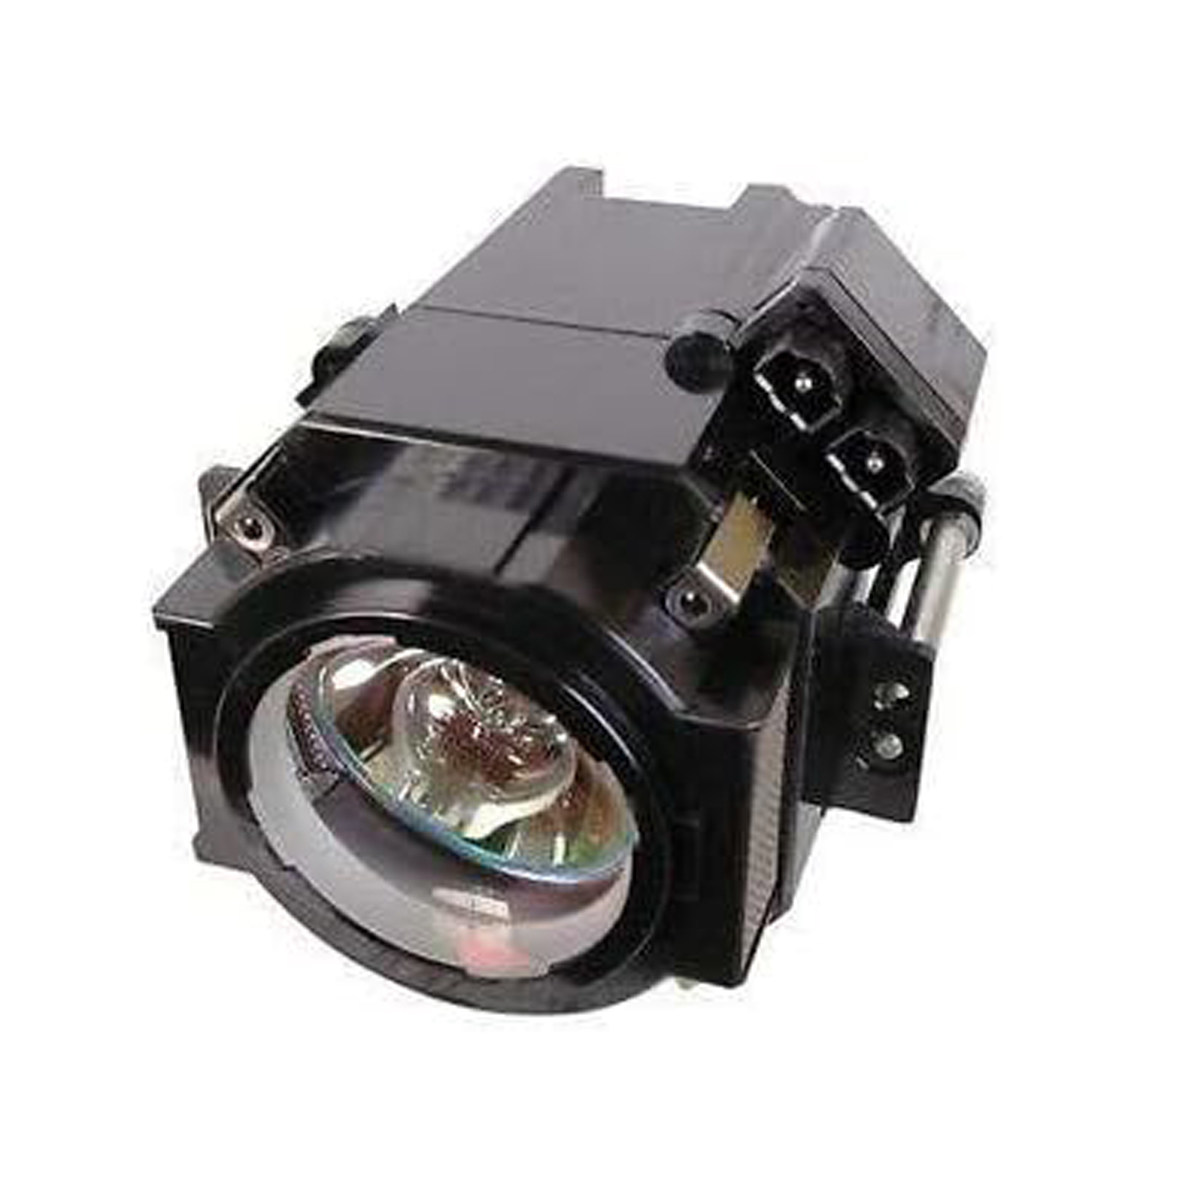 Replacement Projector lamp BHL-5006-S For JVC DLA-HX21 DLA-HX1 DLA-HX2